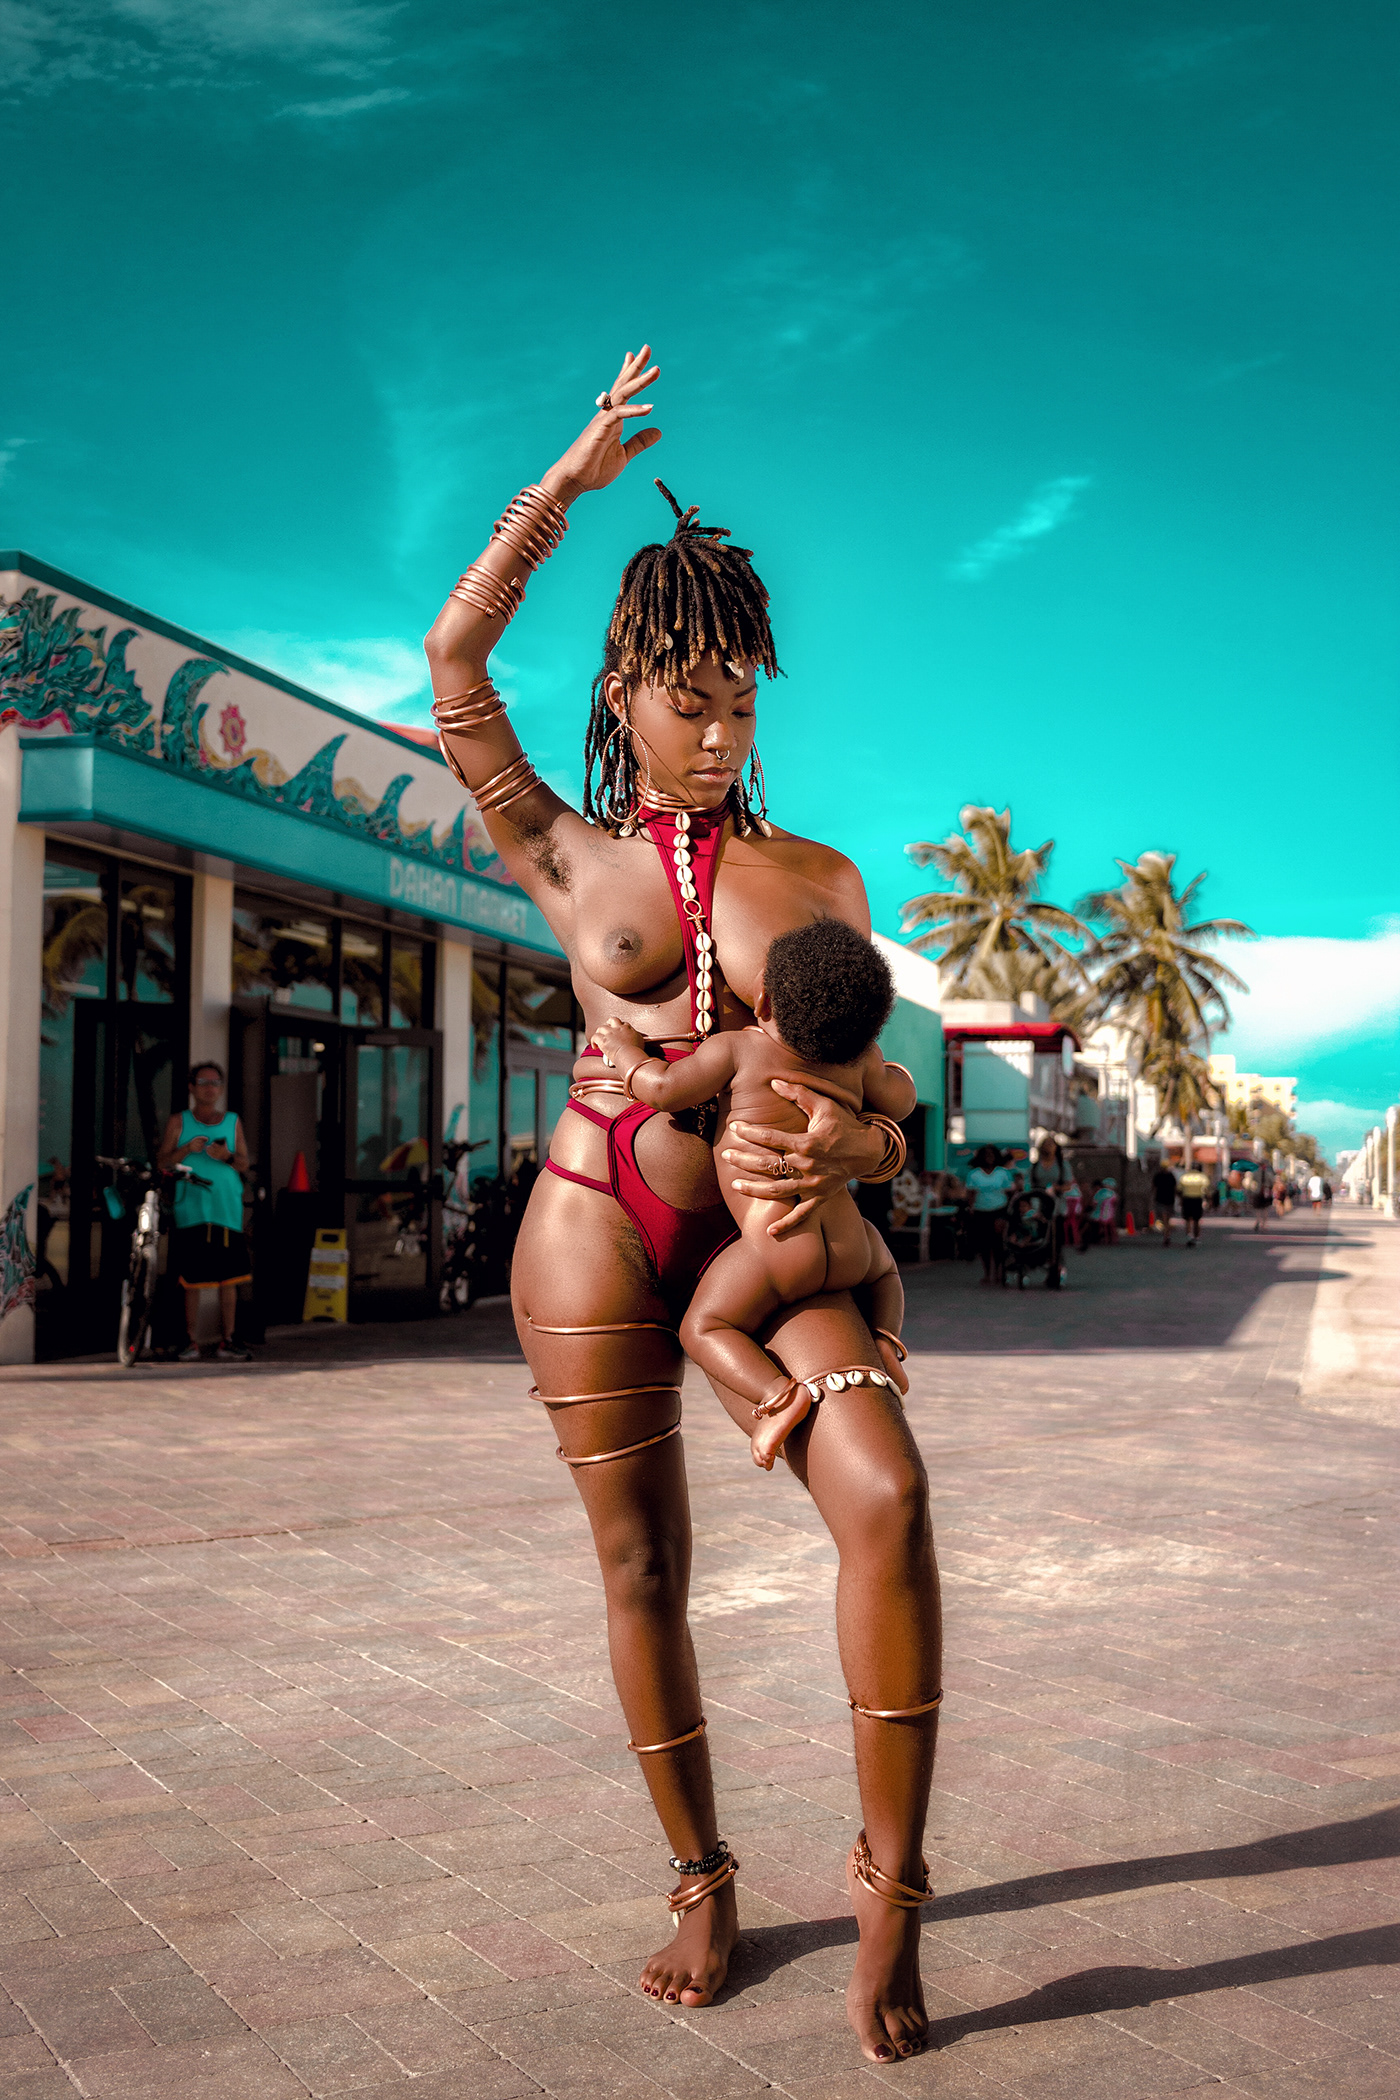 goddess collective Goddess series free the bush free the nipple intimacy warrior wakanda black melanin black empowerment